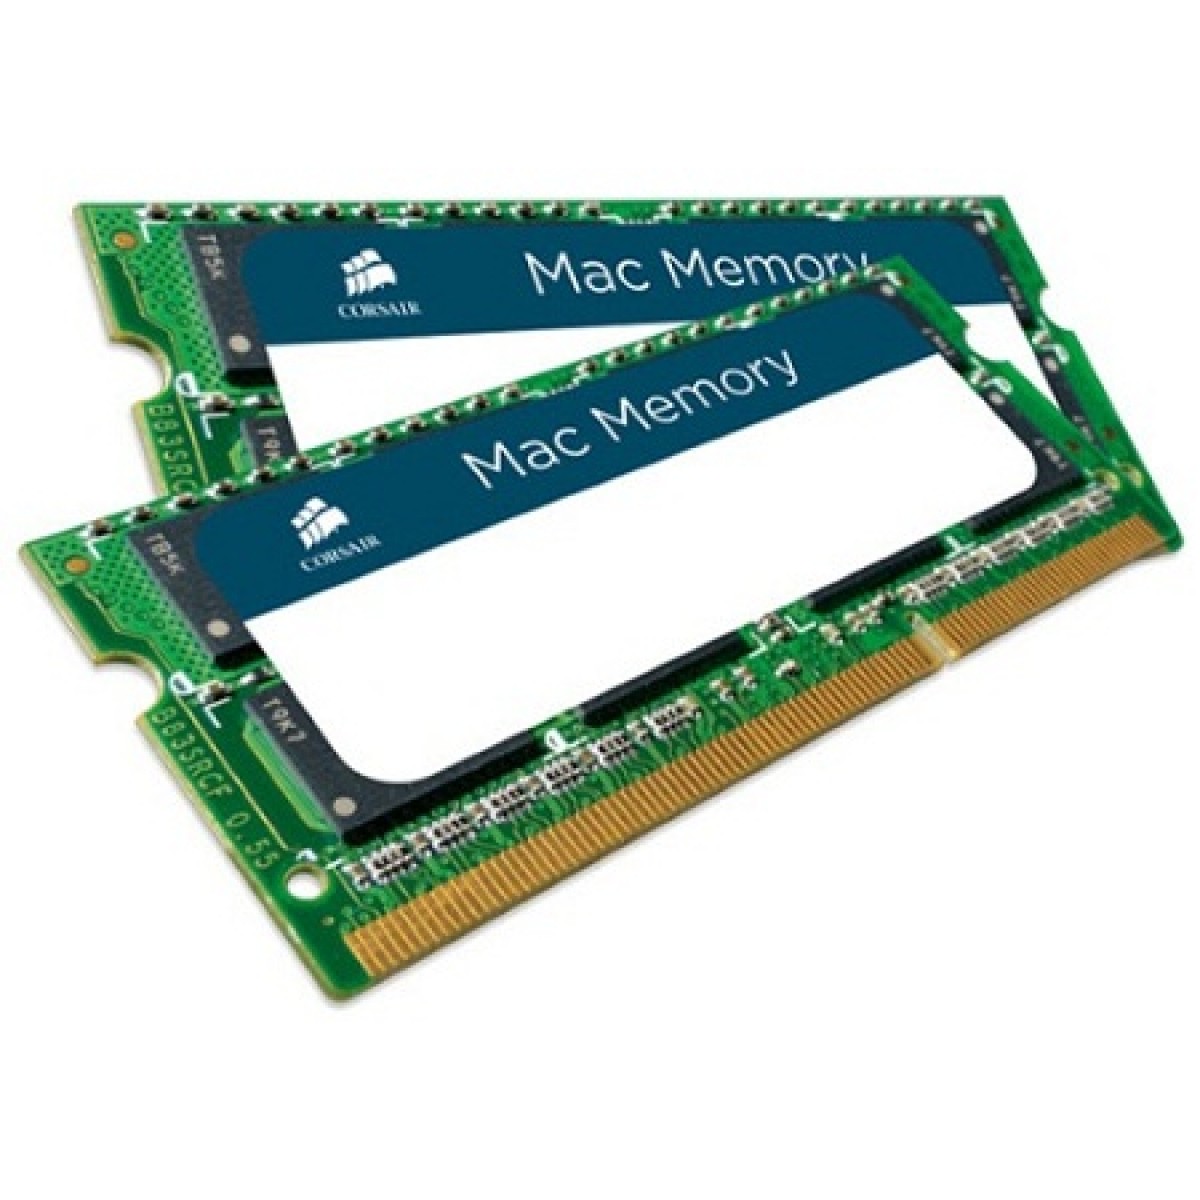 Corsair Mac Memory 16GB 1333MHz CL9 DDR3 SO-DIMM RAM (CMSA16GX3M2A1333C9)